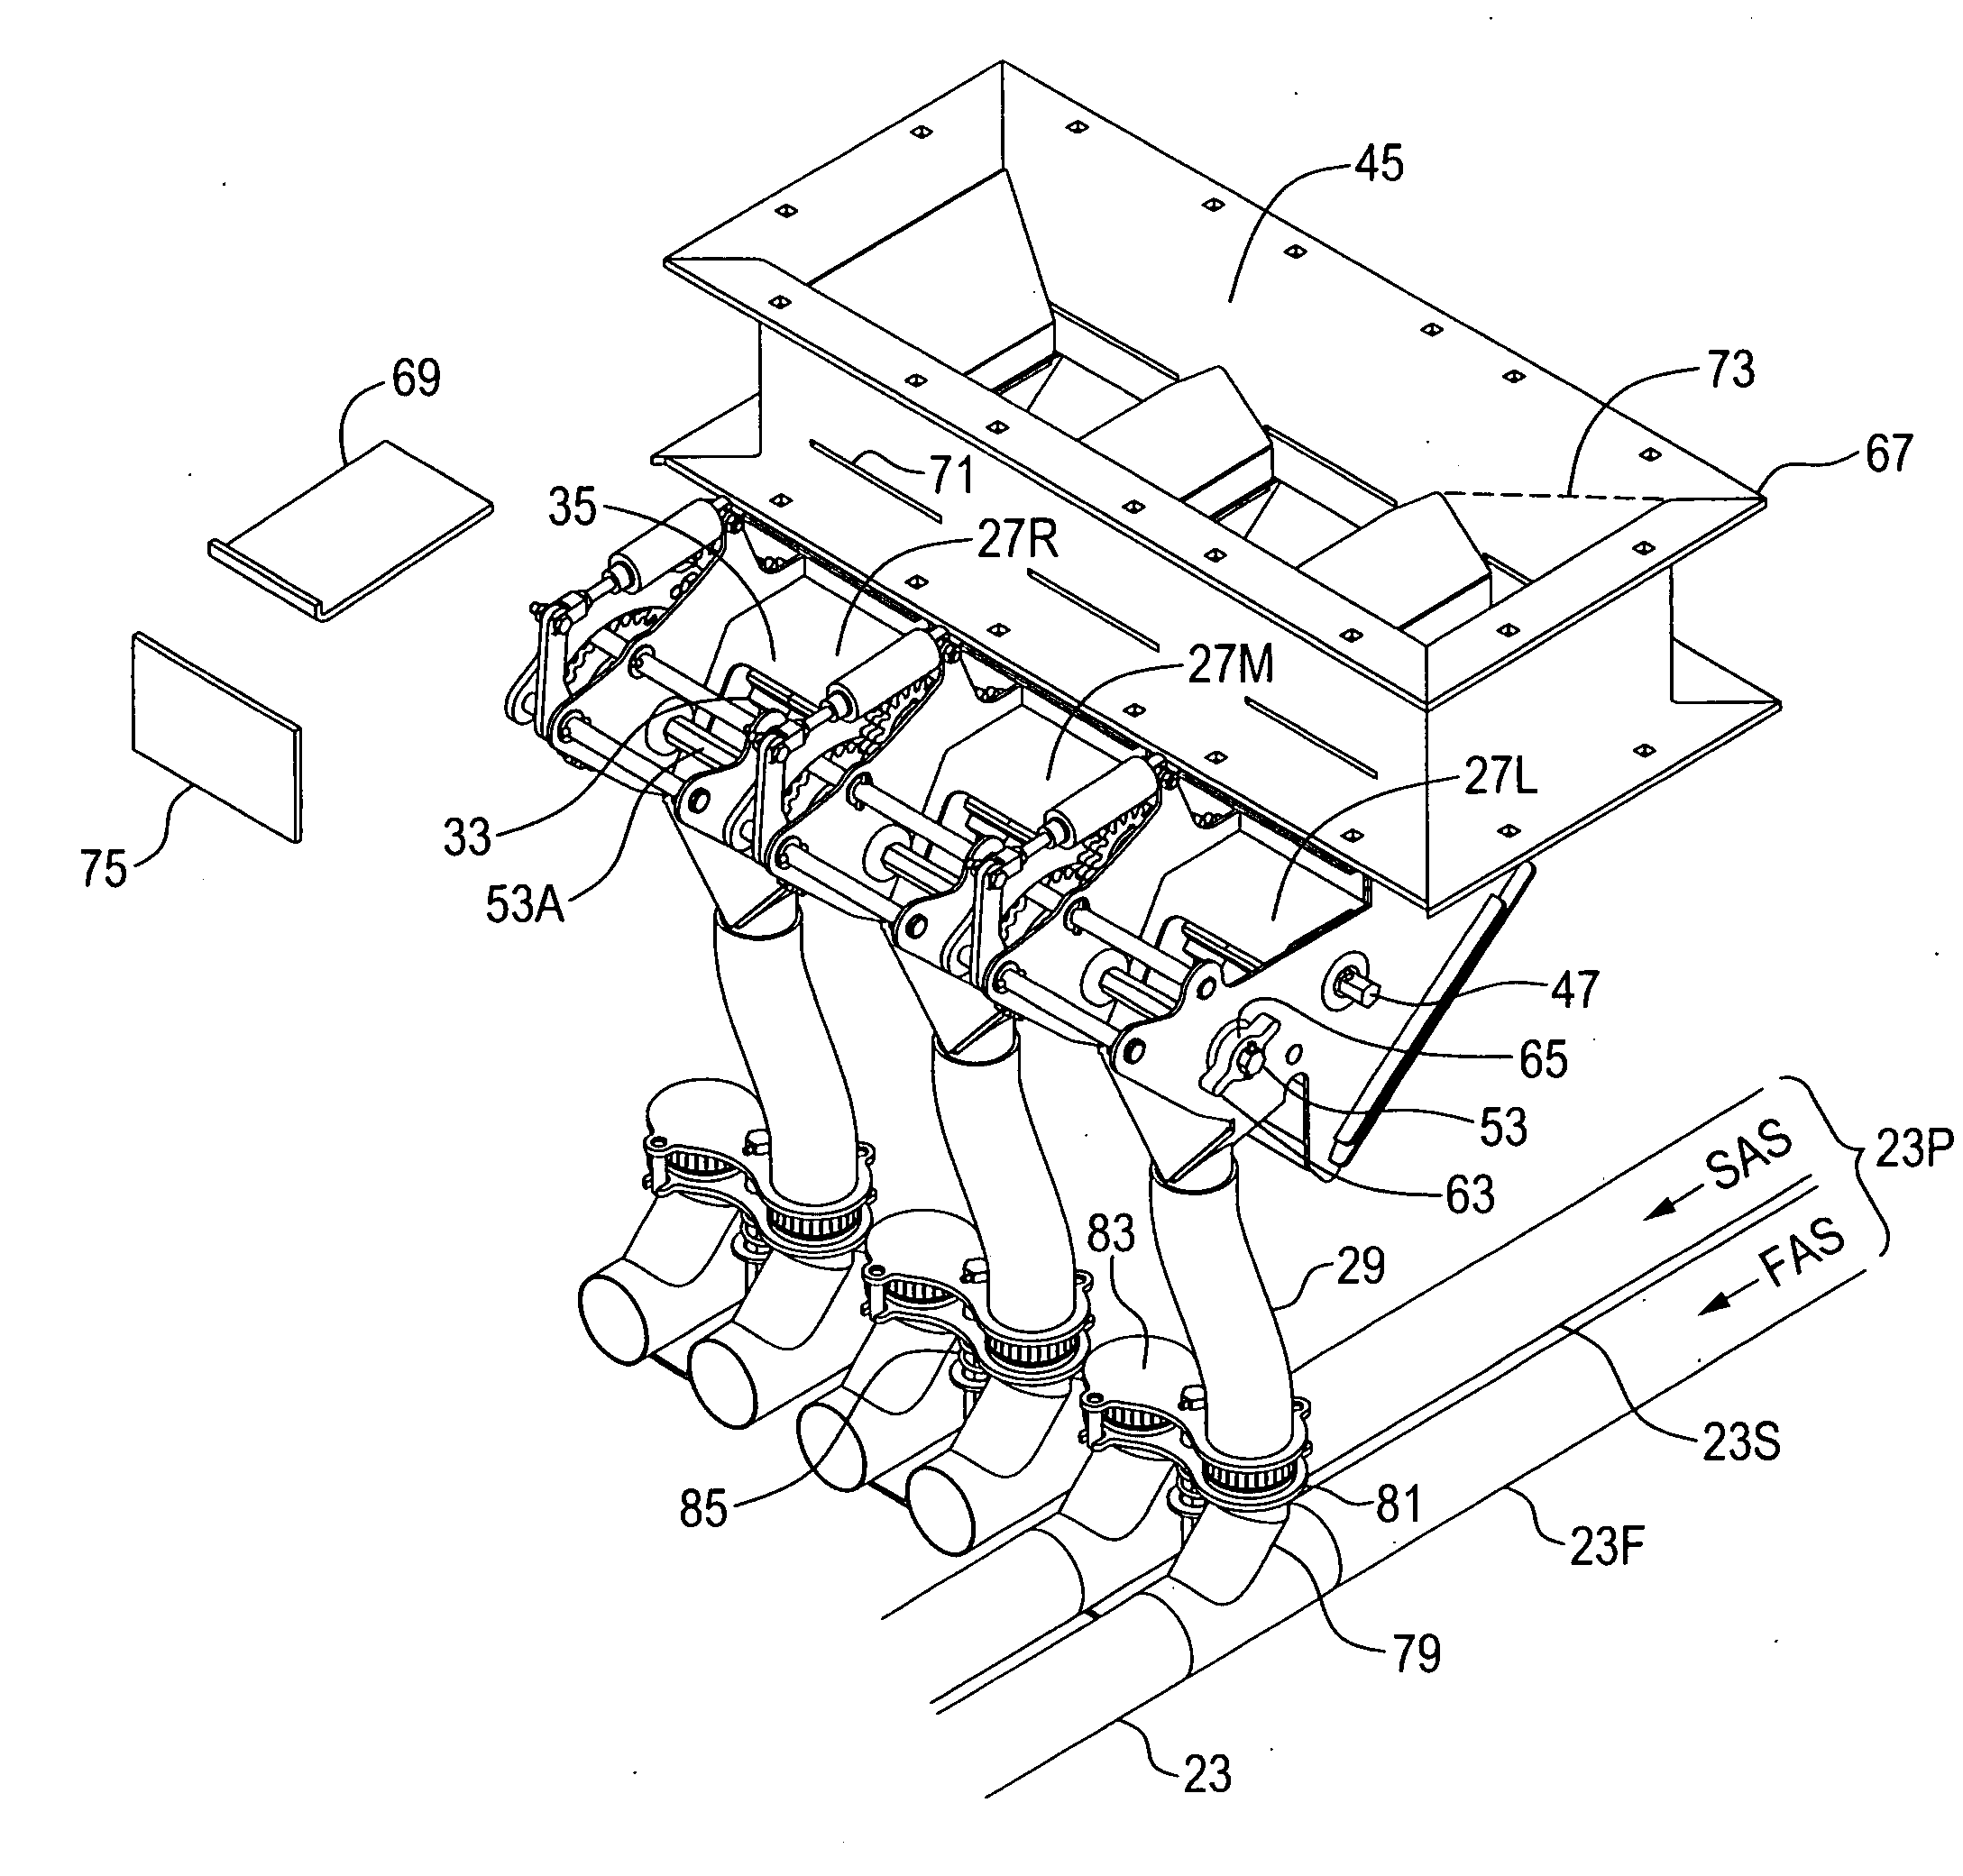 Air seeder tank and distribution apparatus